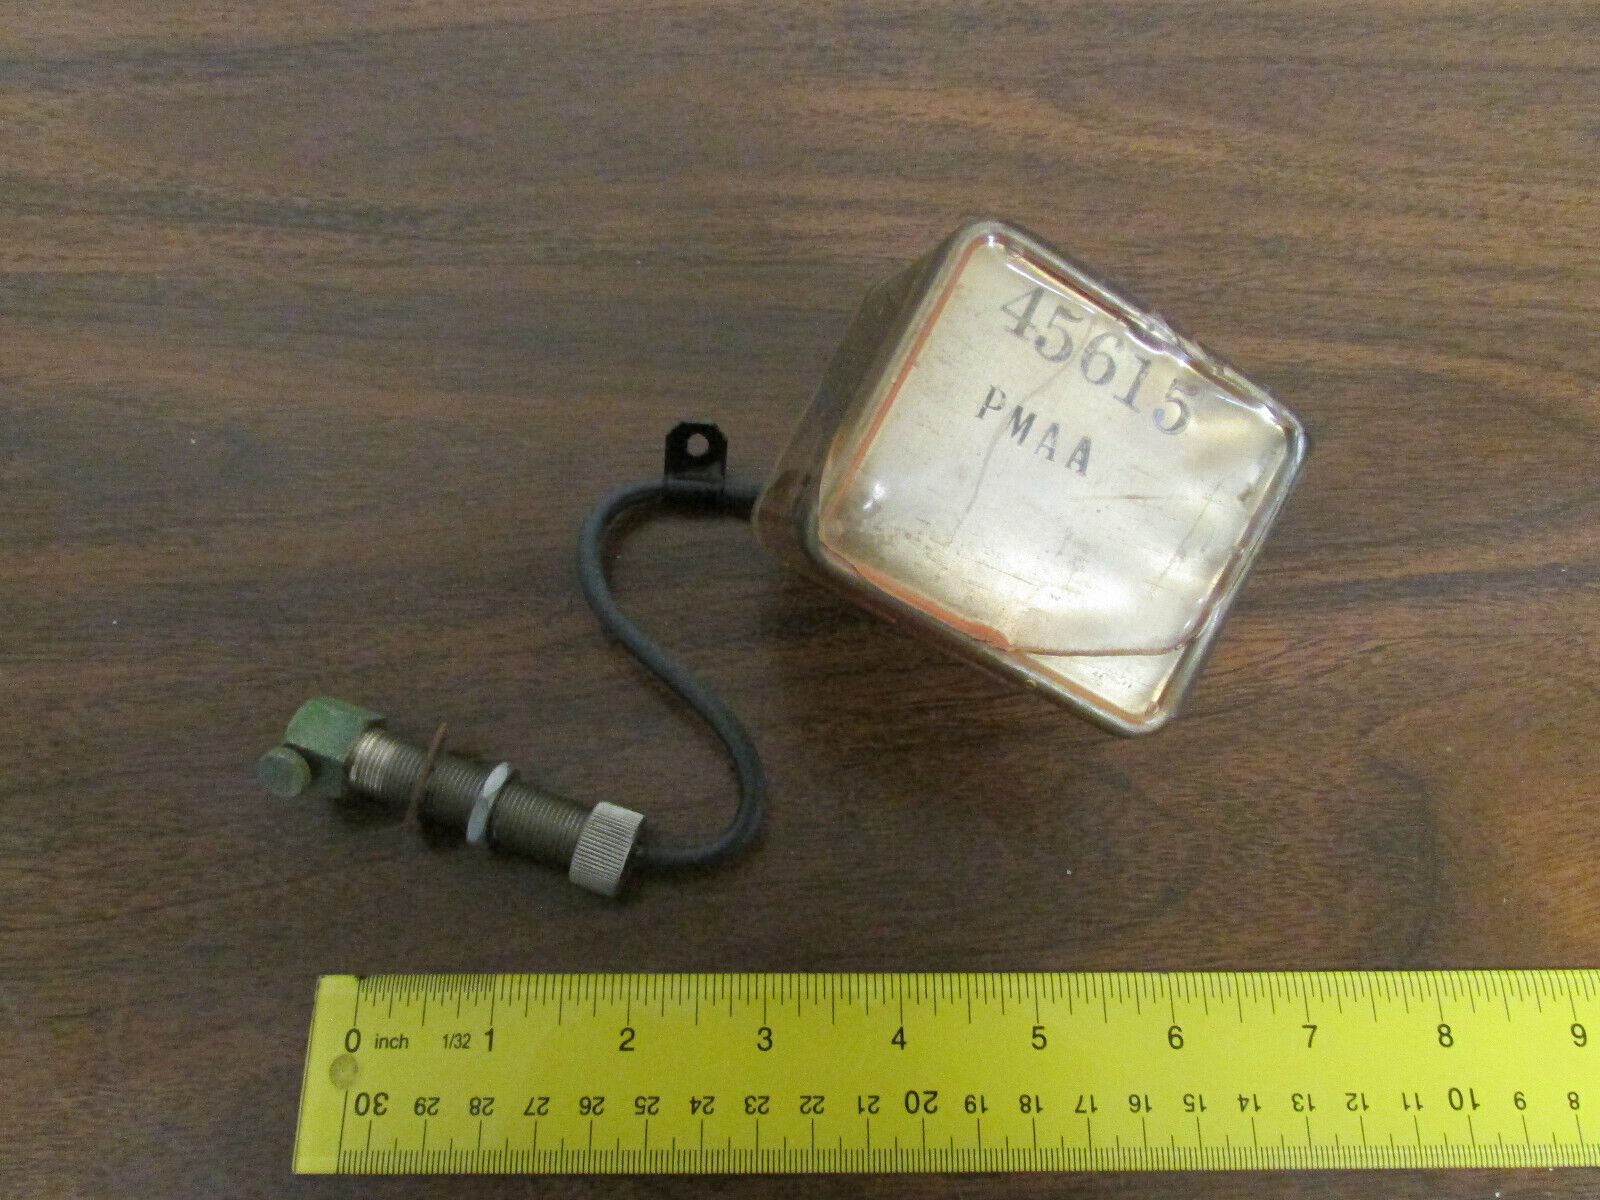 High Voltage / Imput Unit From Vintage Laboratory PH Meter